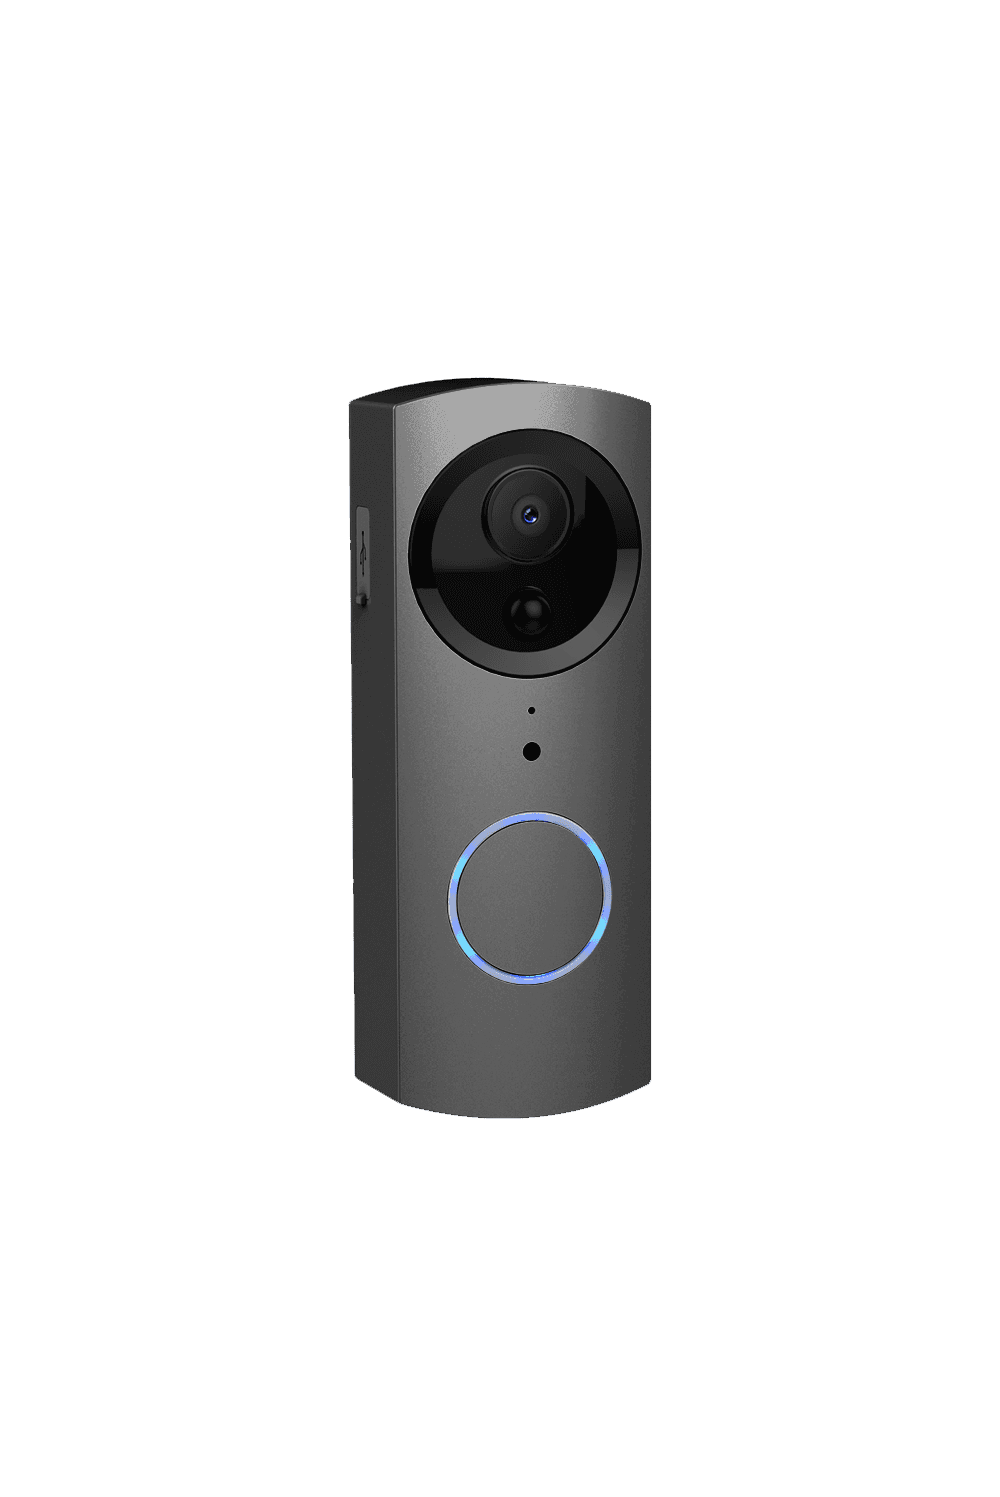 r9061-video-doorbell-chime-p76-586_image